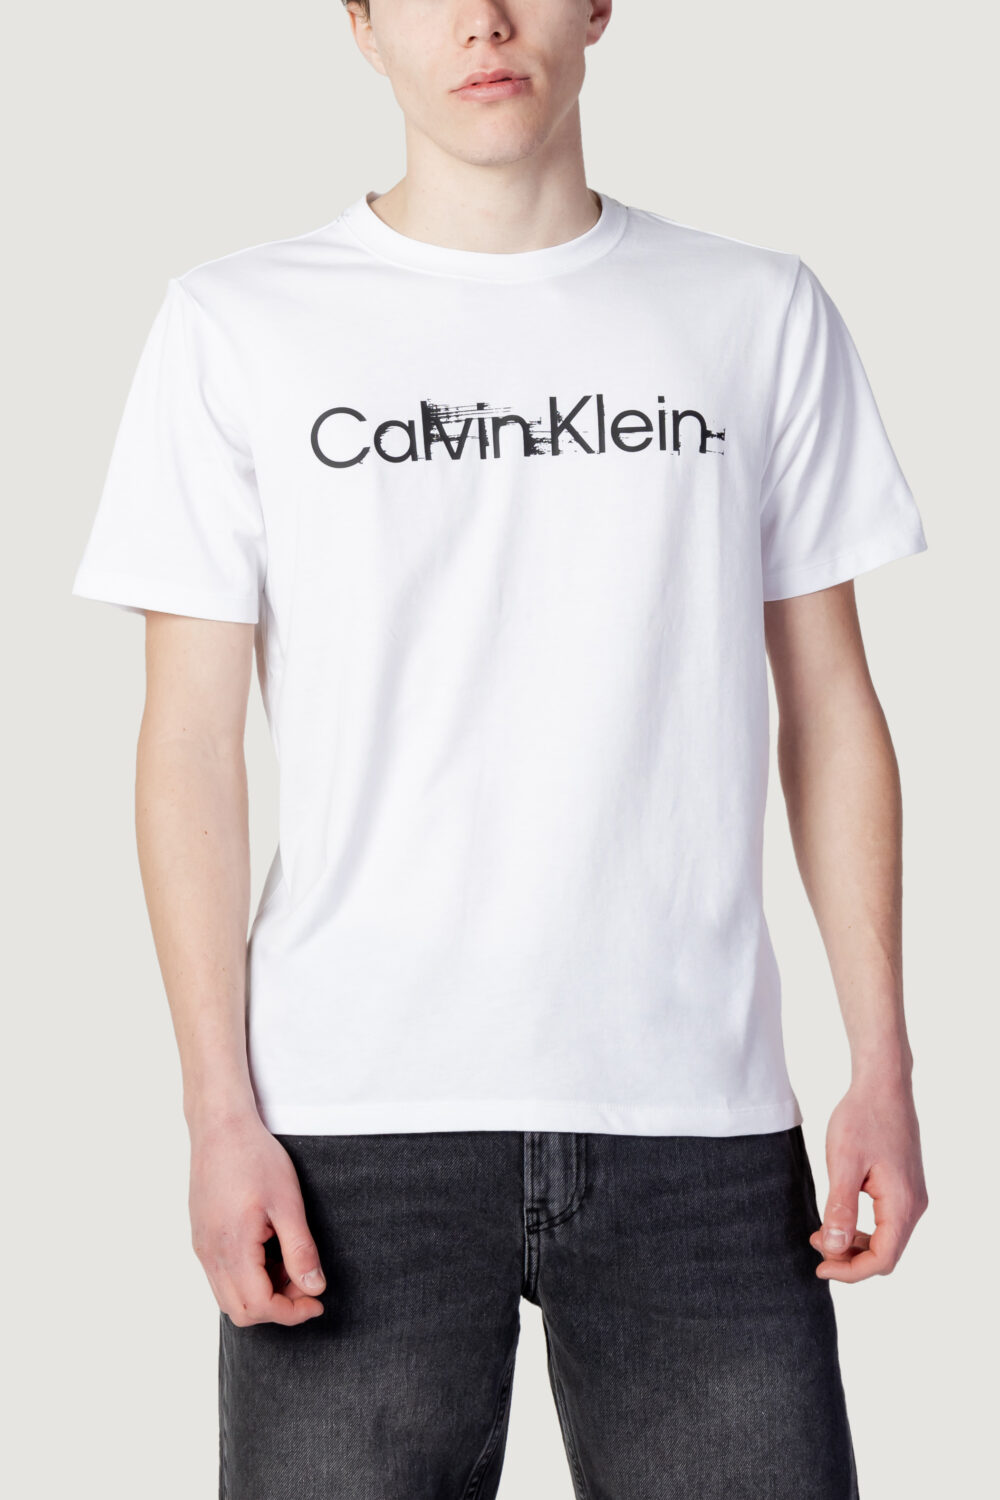 T-shirt Calvin Klein Sport PW - S/S T-Shir Bianco - Foto 1